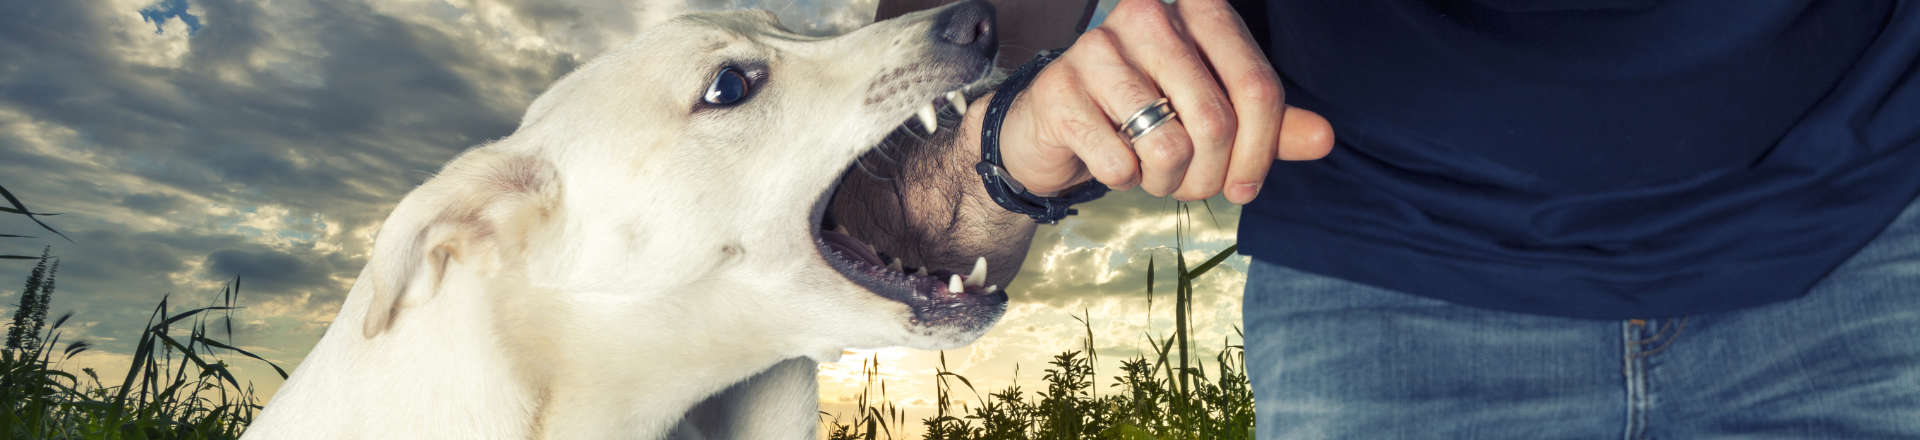 a dog biting man's arm